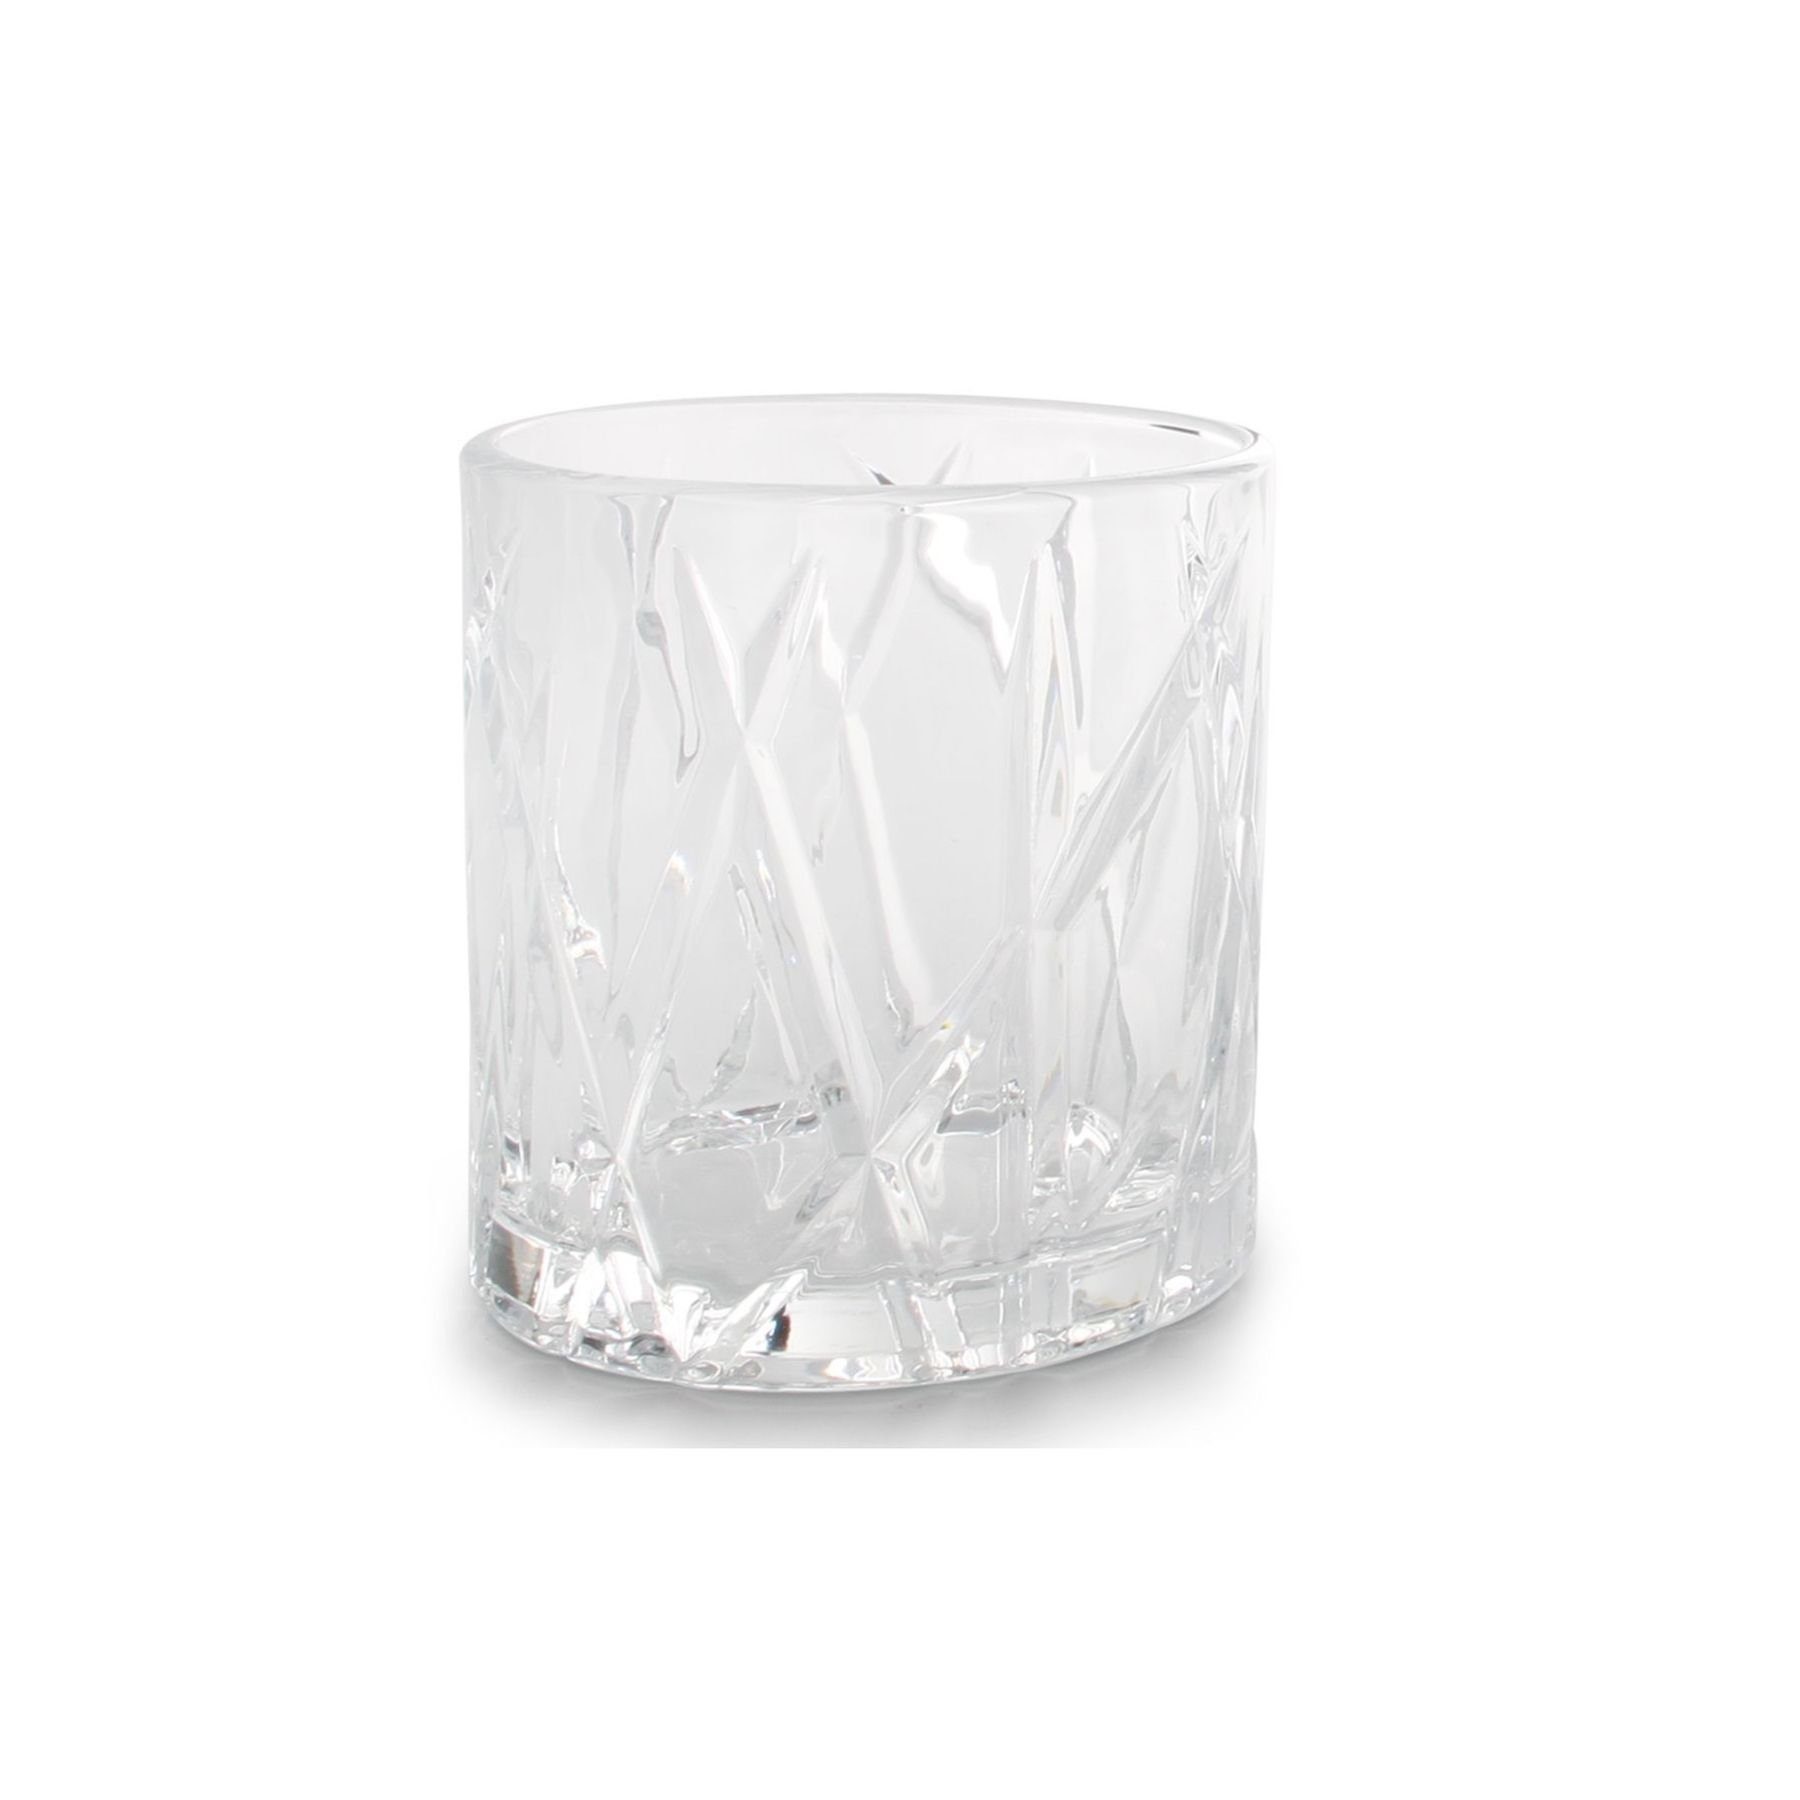 Asphald Glas 6er Set Trinkgläser Gläser Set 325ml Trinkglas Glas, Schönes Design